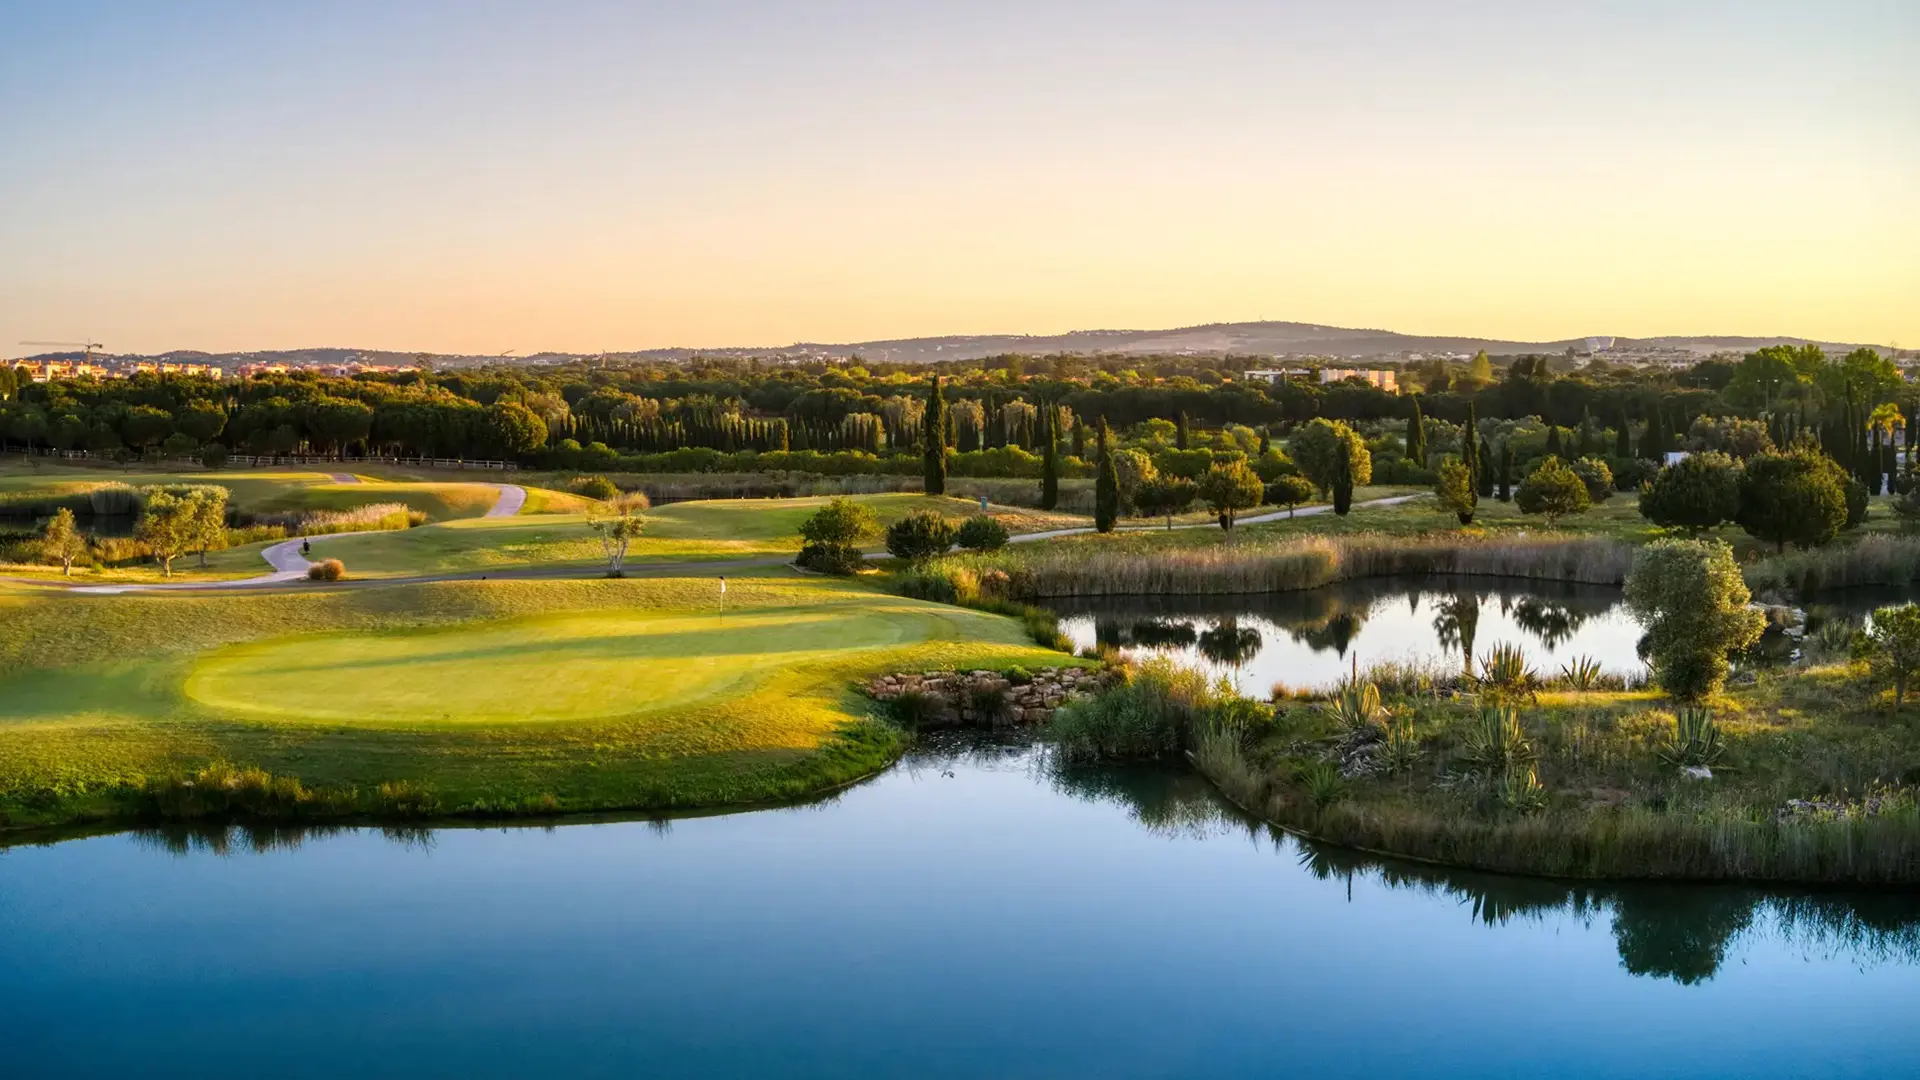 Portugal golf holidays - Palmares golf course - algarve - Photo 1